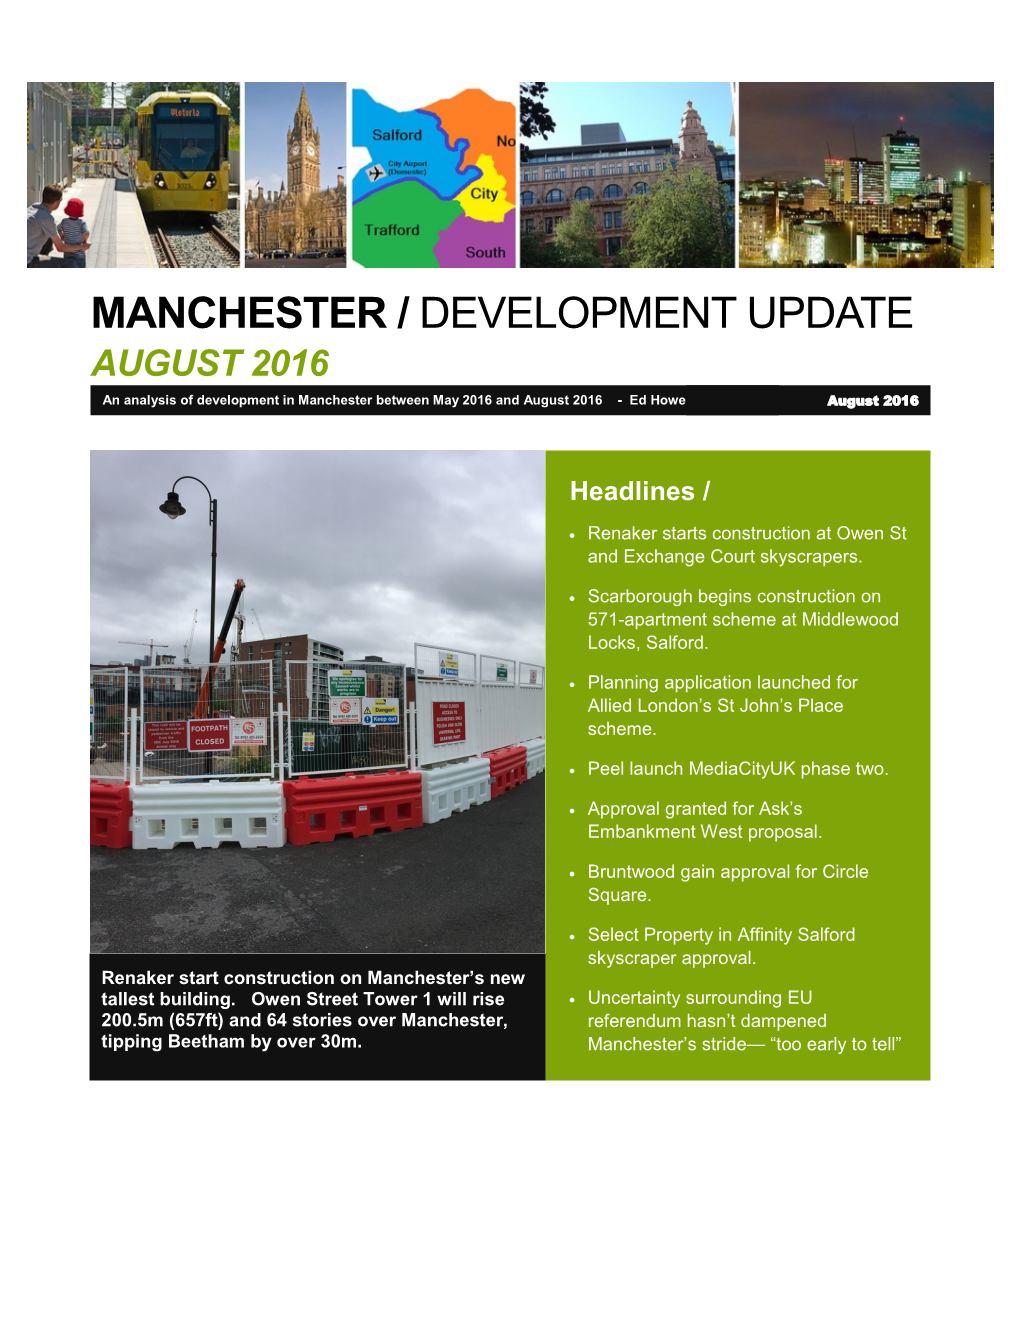 Manchester Development Update August 2016